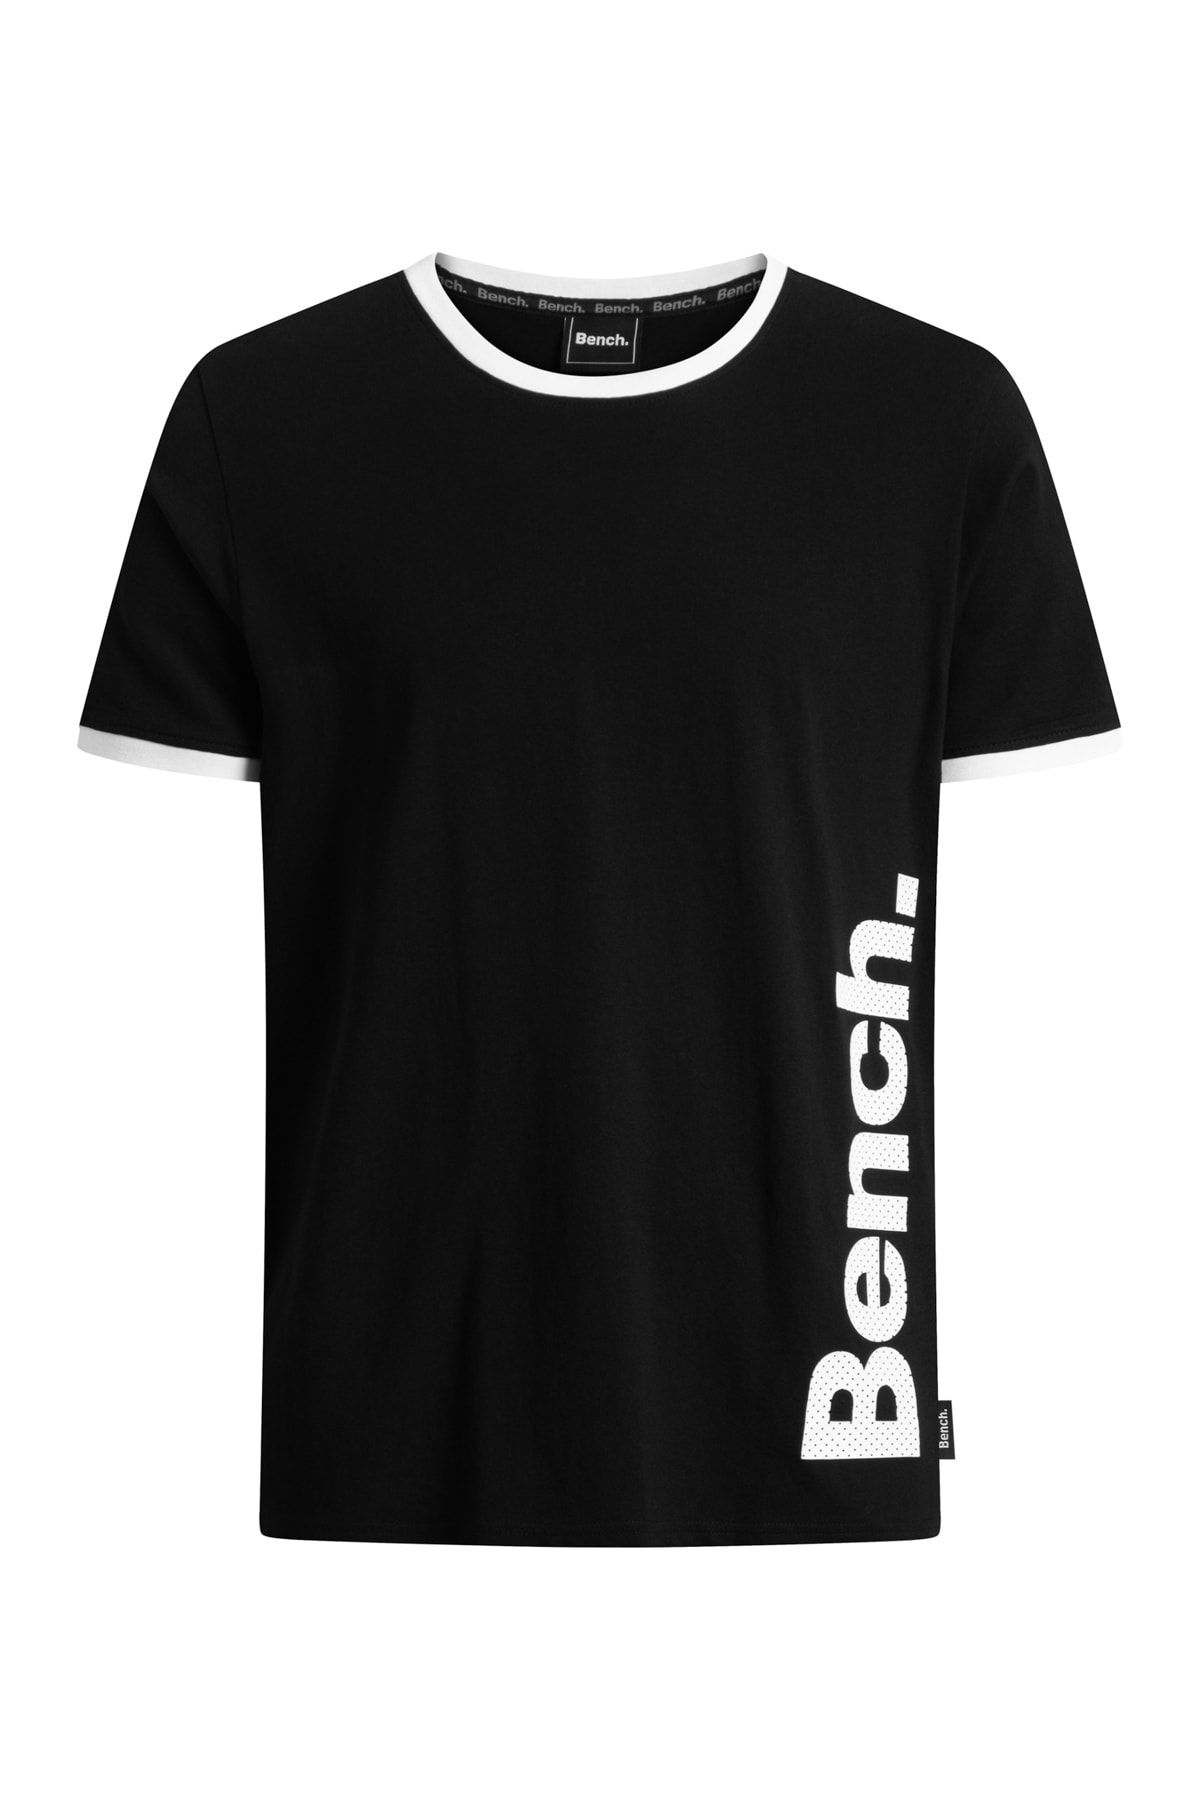 BENCH T-Shirt - Black - Regular fit - Trendyol